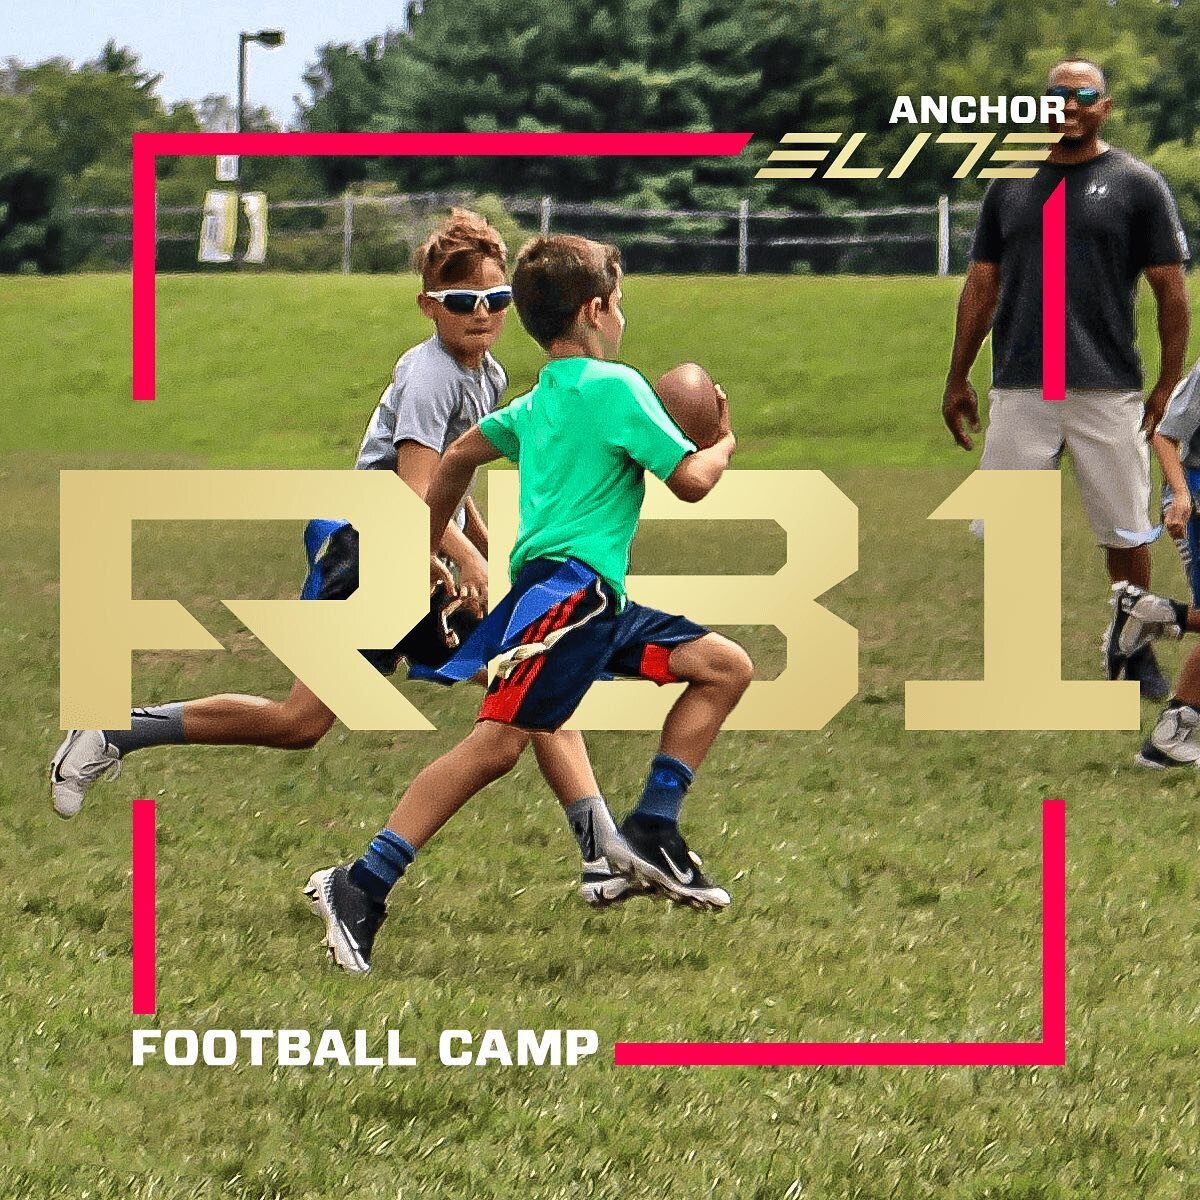 The Anchor Elite Preseason Football Camp! Our RB1 track focuses on speed, agility and positional awareness. This Sunday @johncarrollschool! #linkinbio